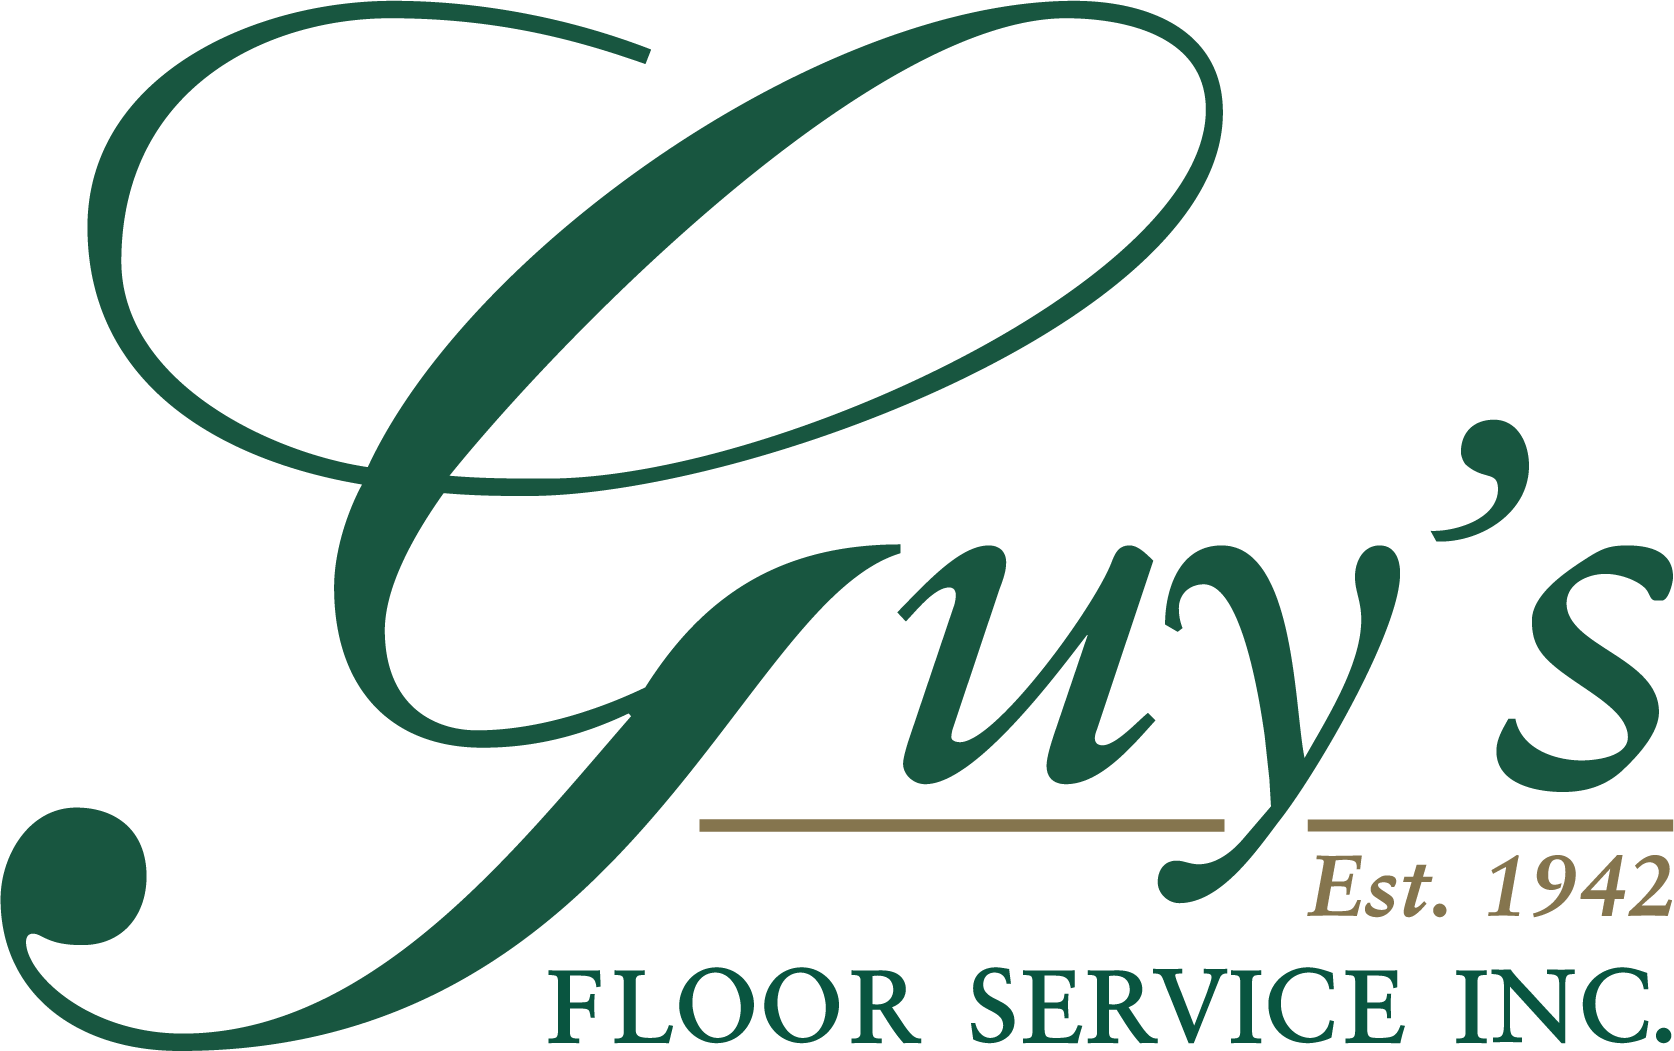 Guy's Floor Service, Inc. logo